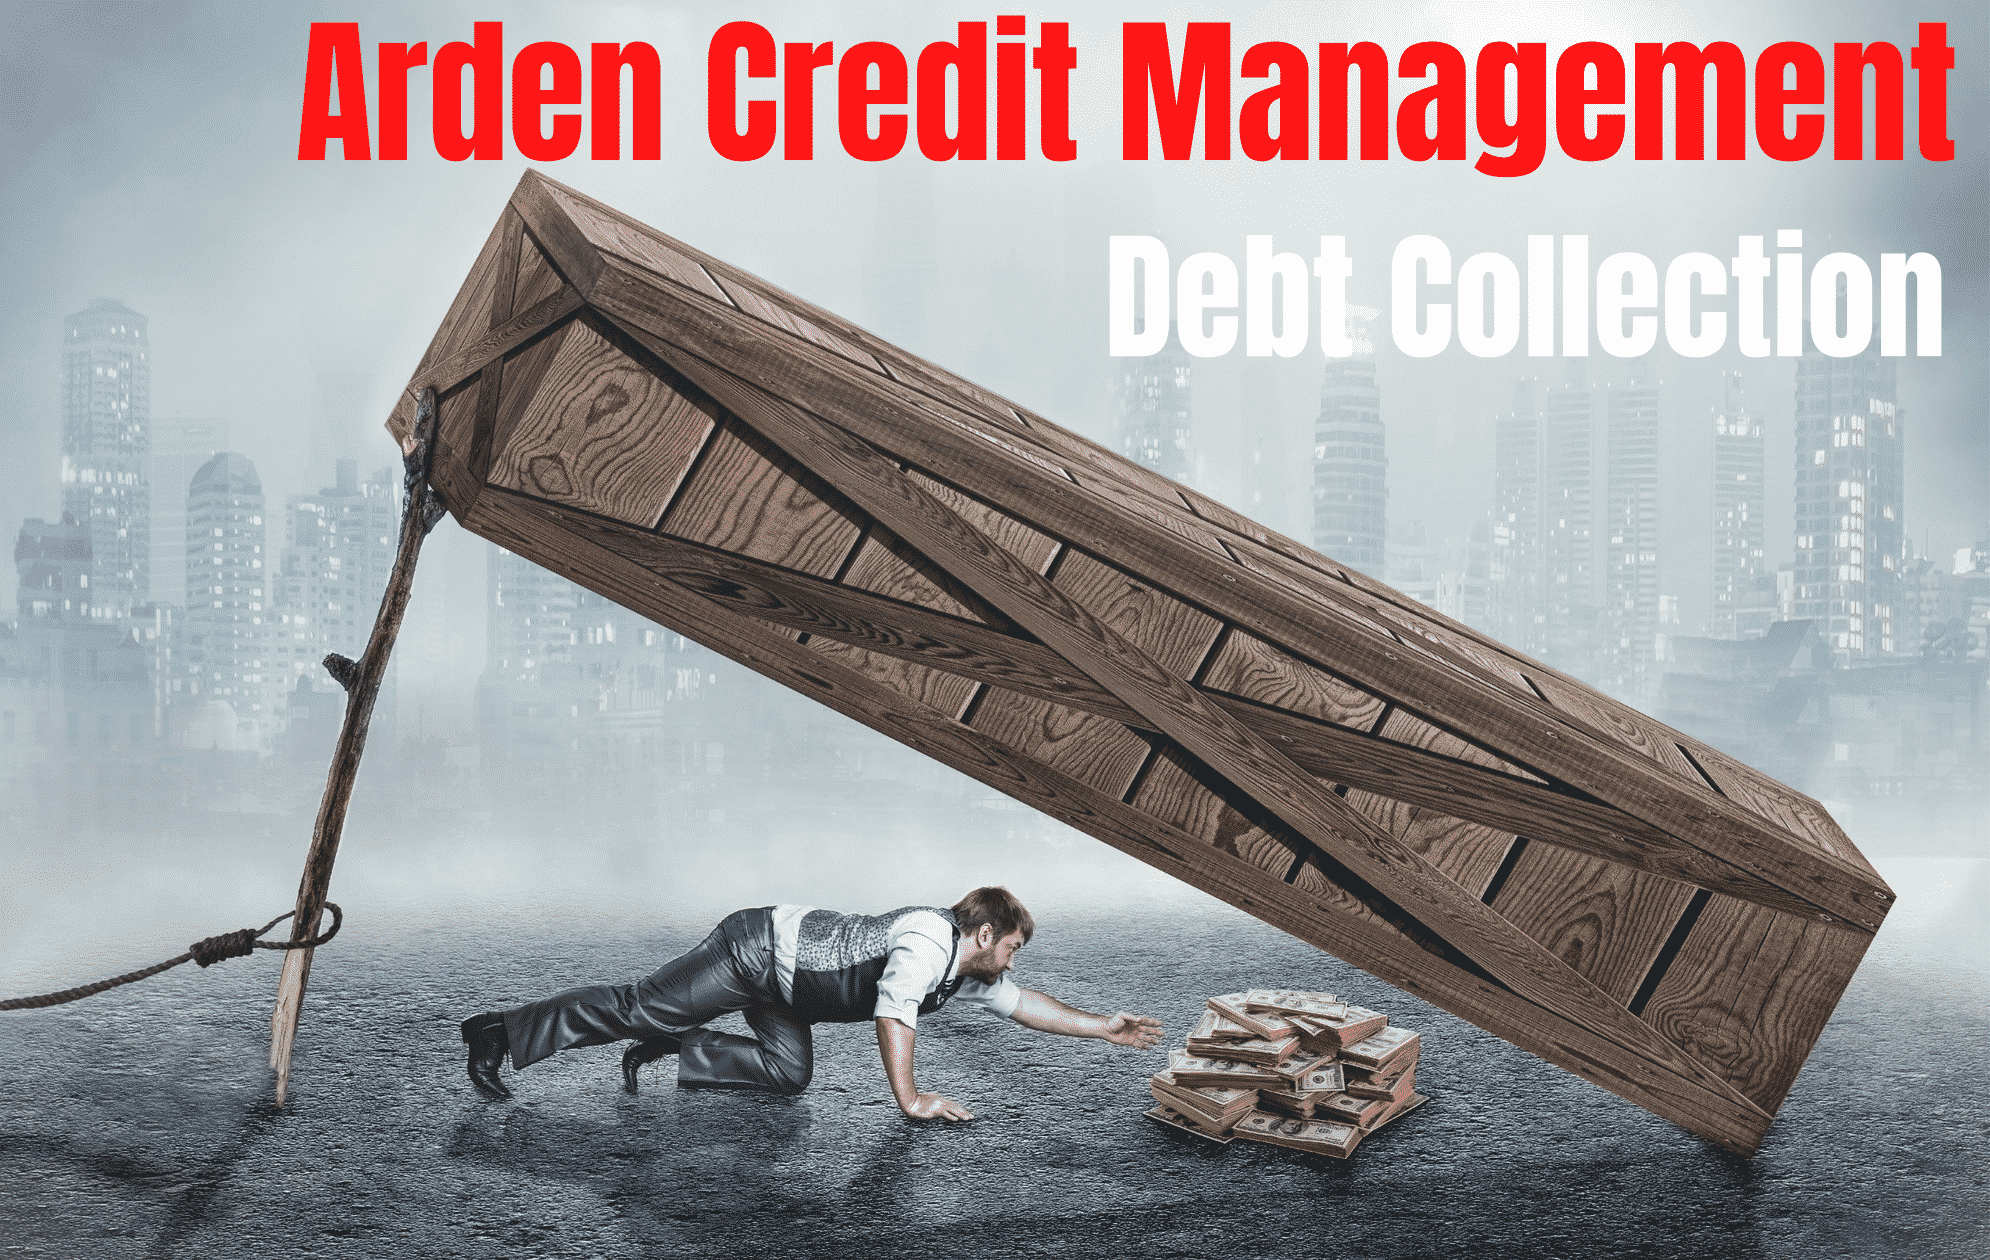 Arden-credit-management-debt-collection